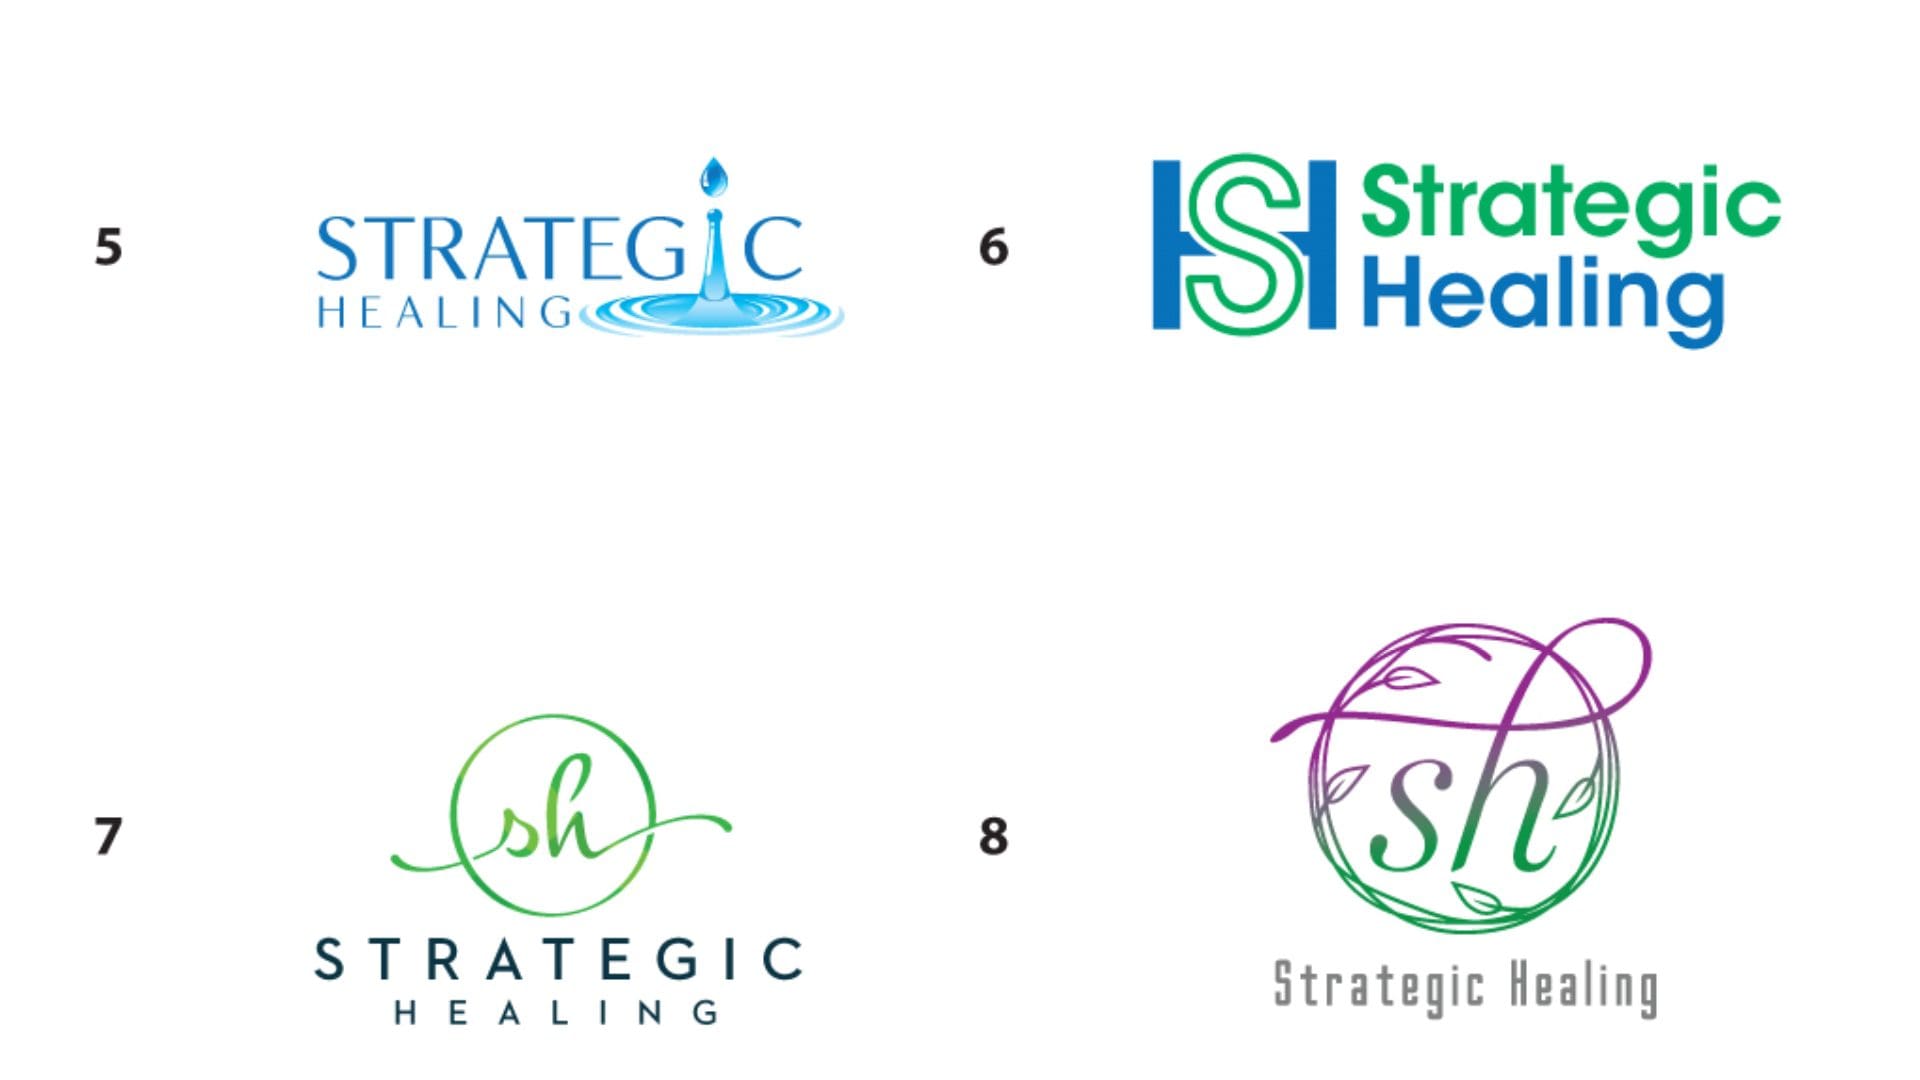 Strategic Healing - Concept 5-8